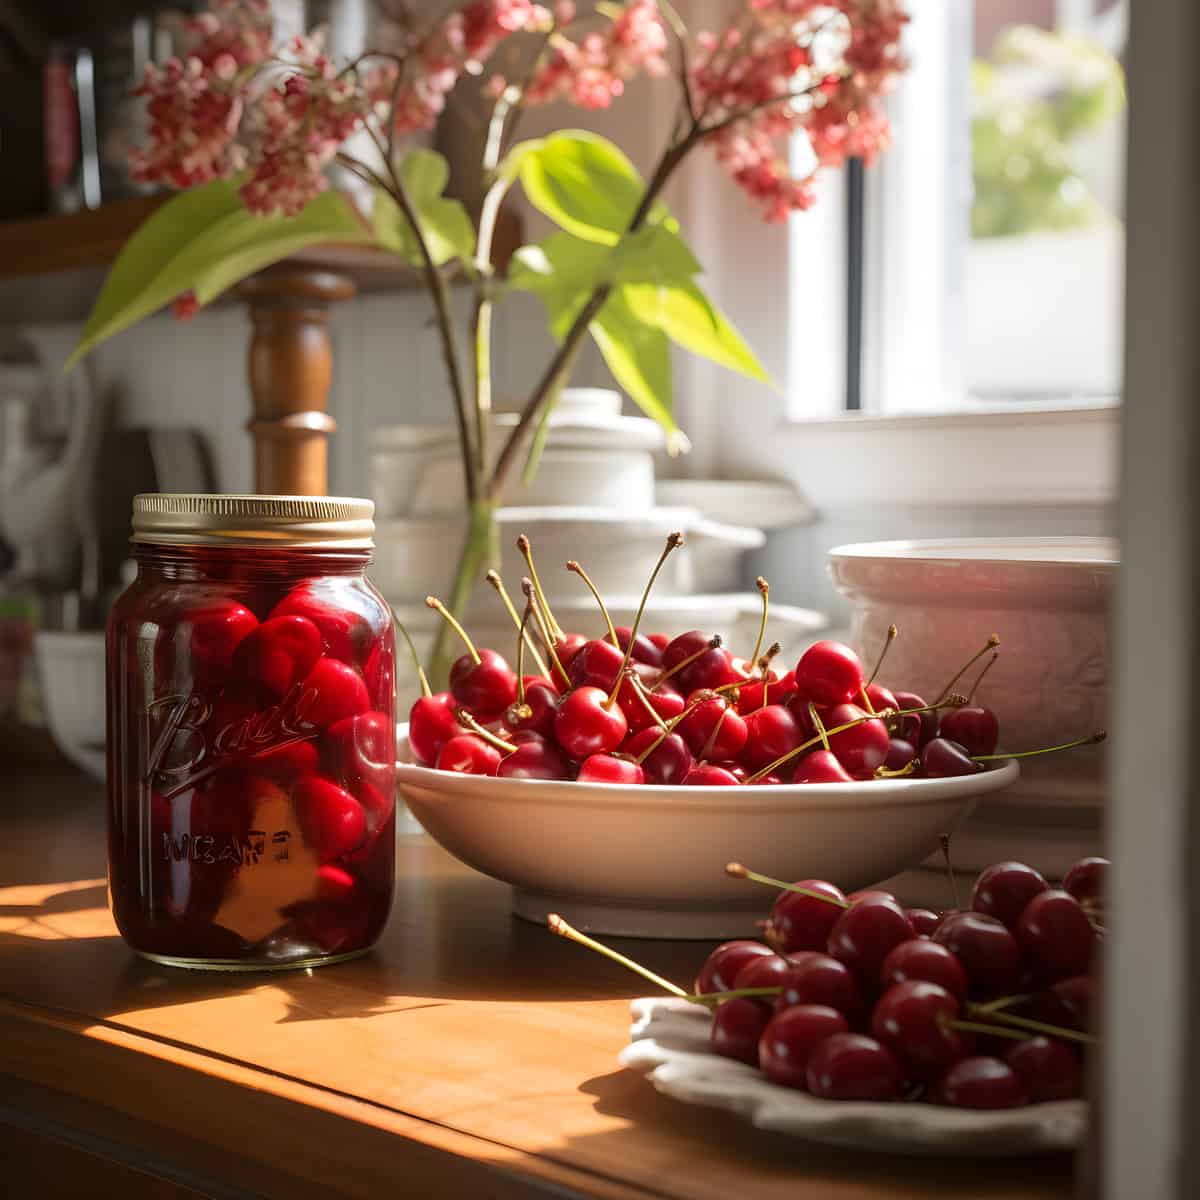 Manchurian Cherries on a kitchen counter